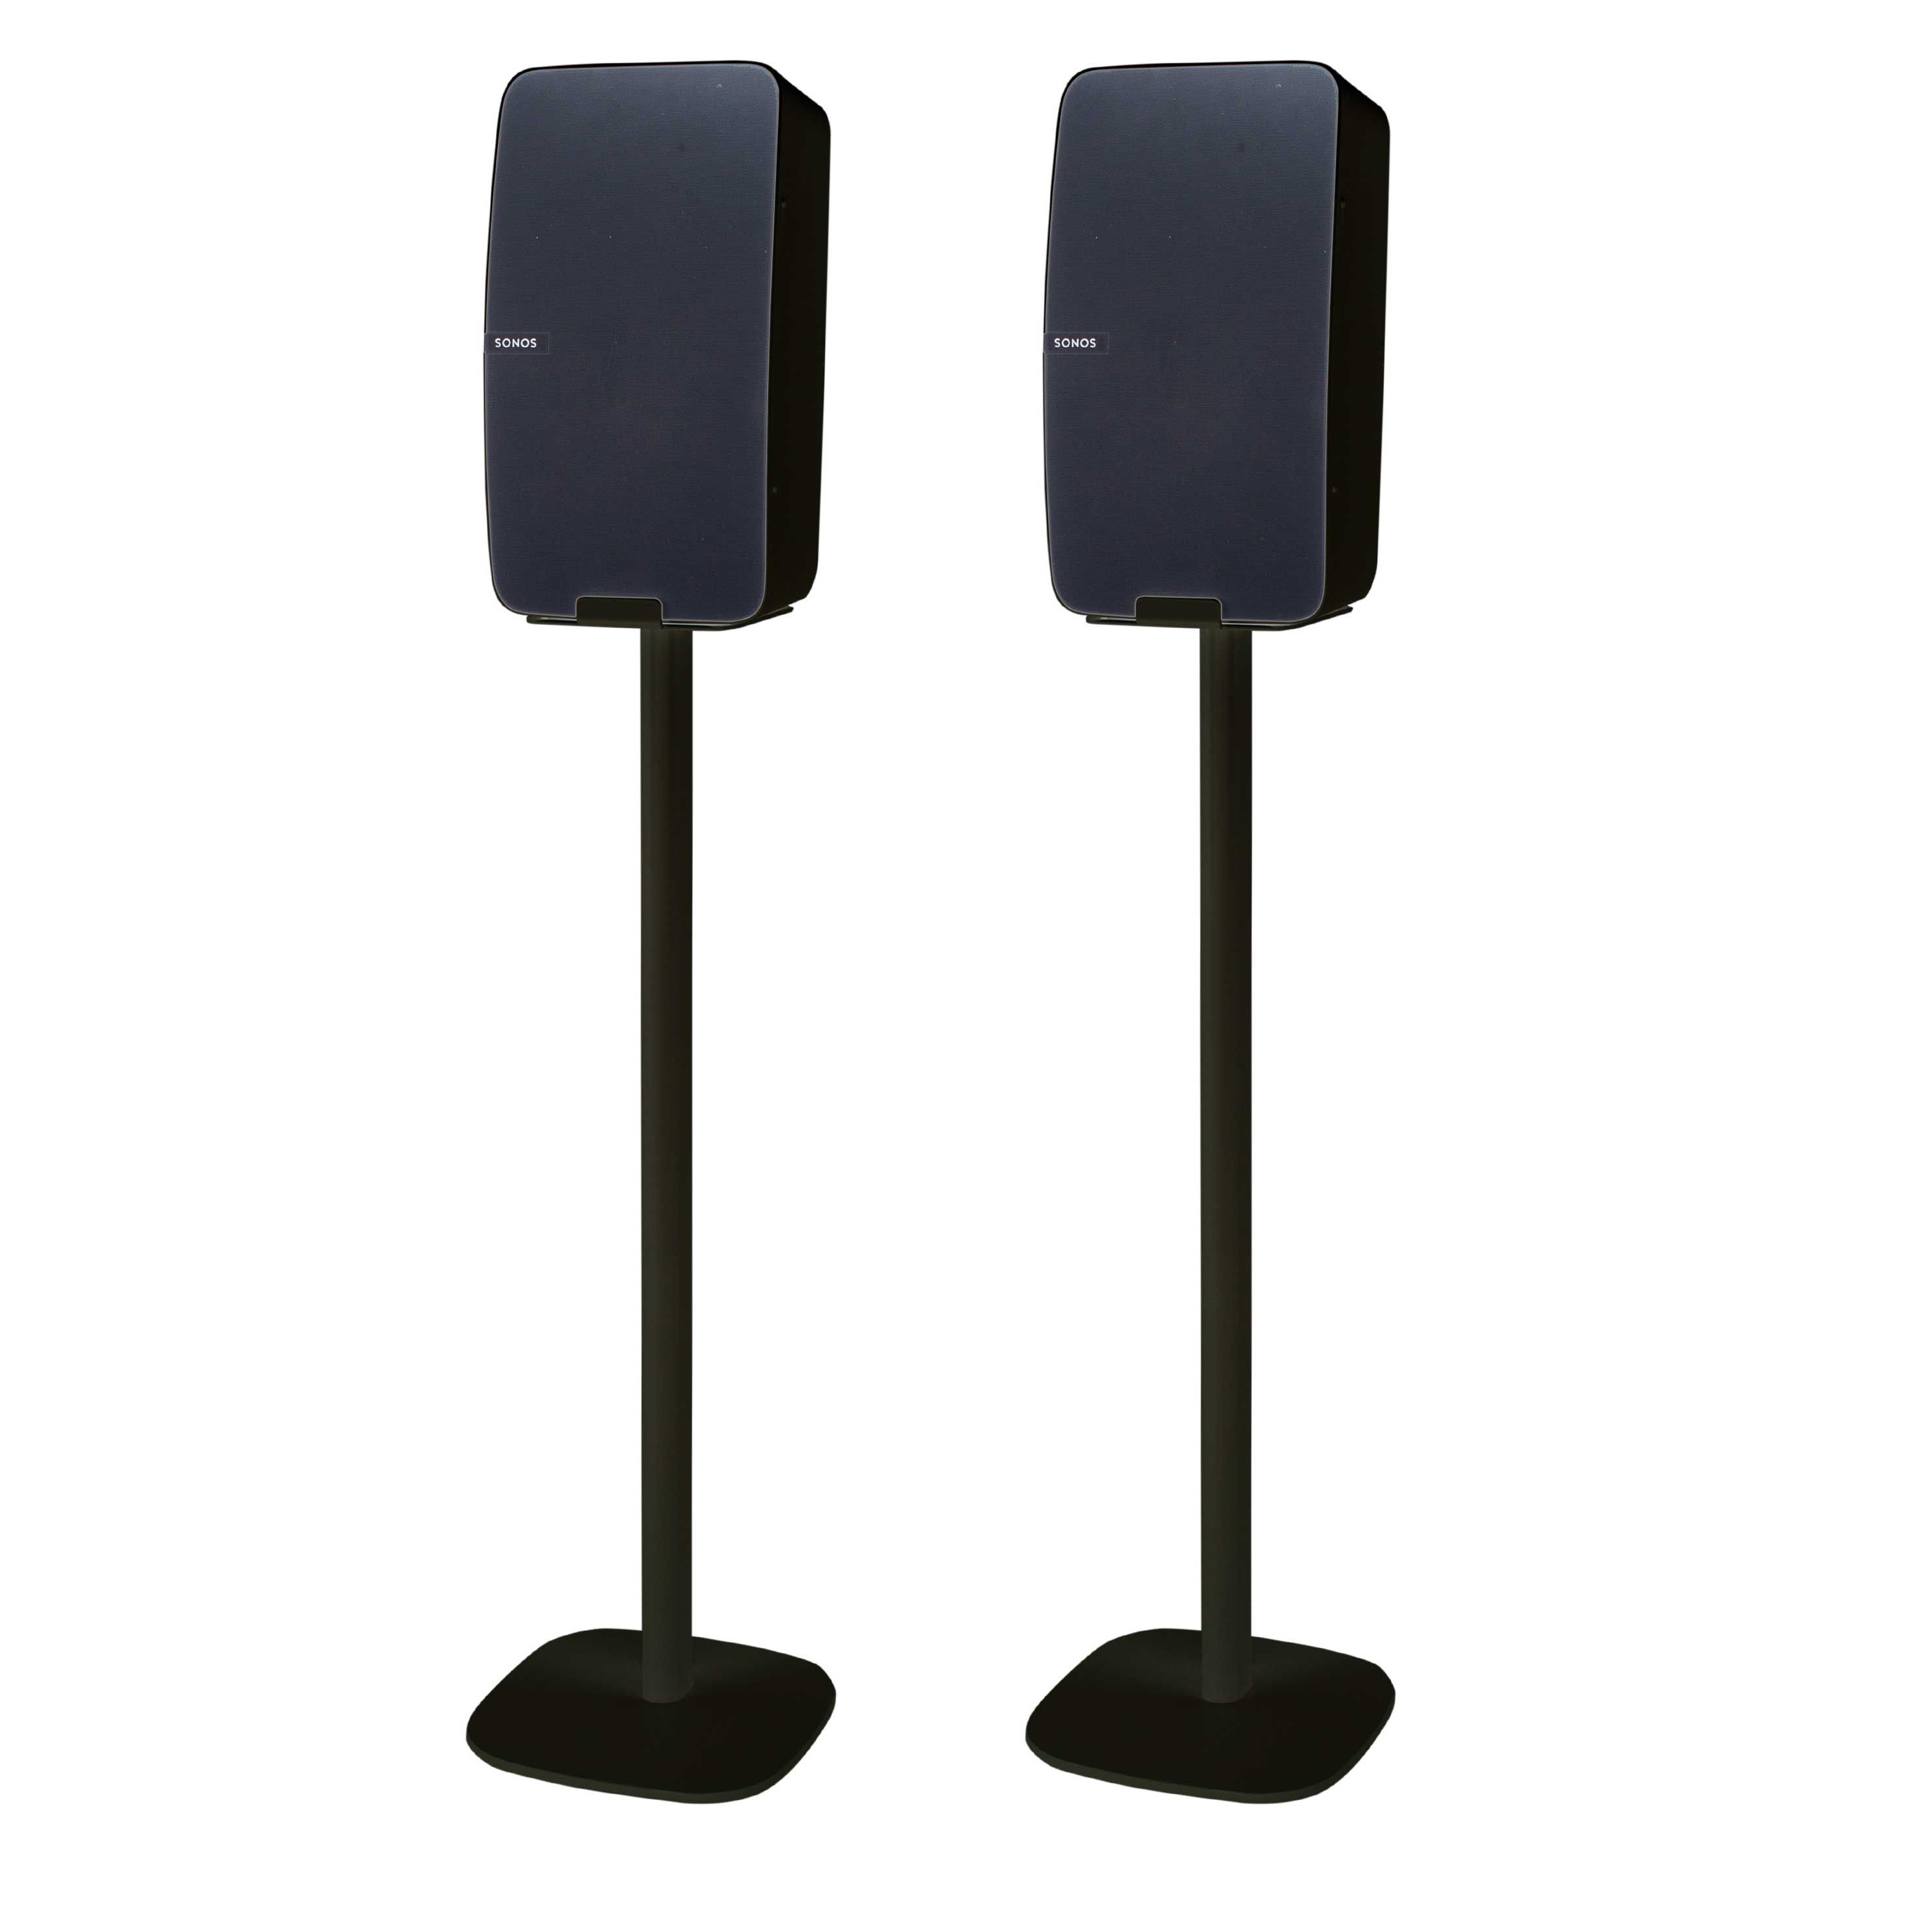 Vebos stand Sonos Five black set | The floor for Sonos Five